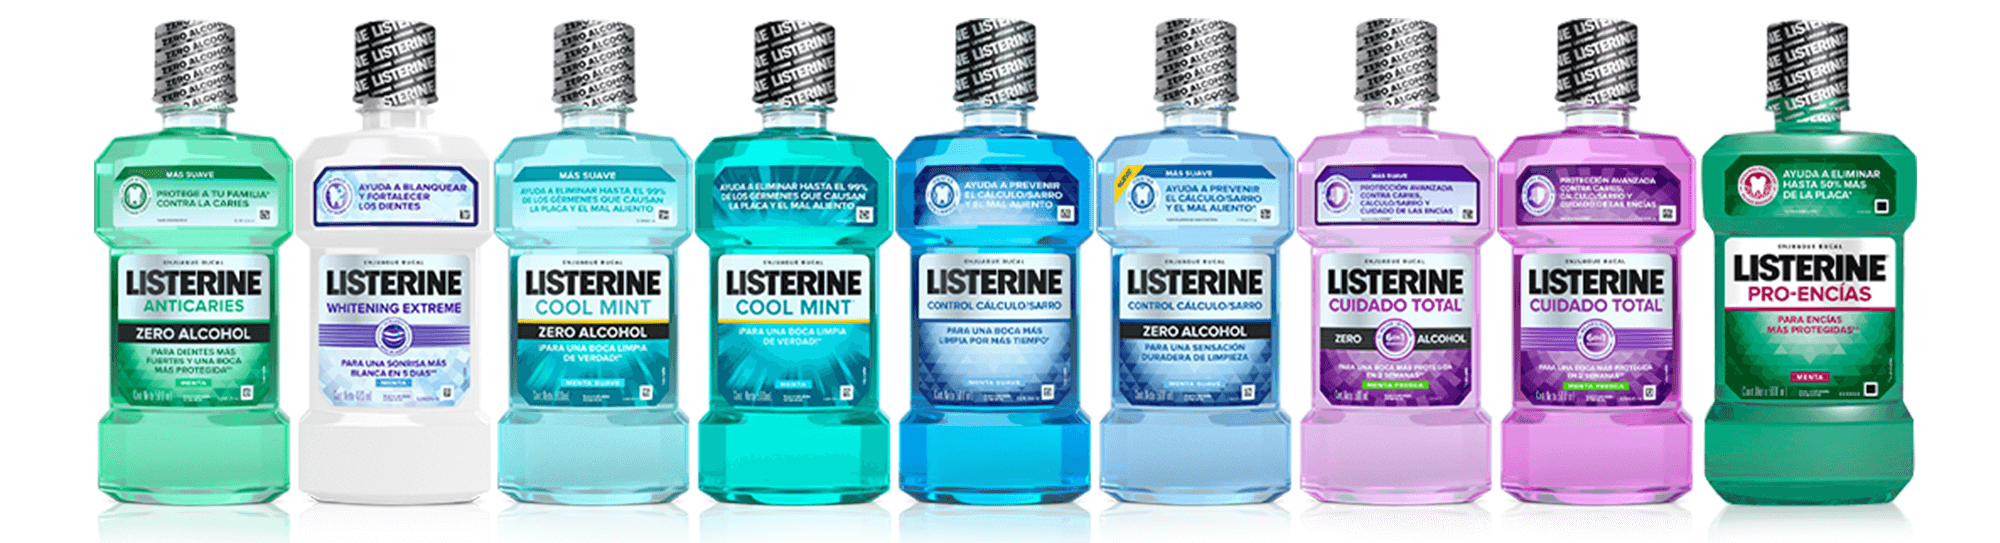 Productos Listerine